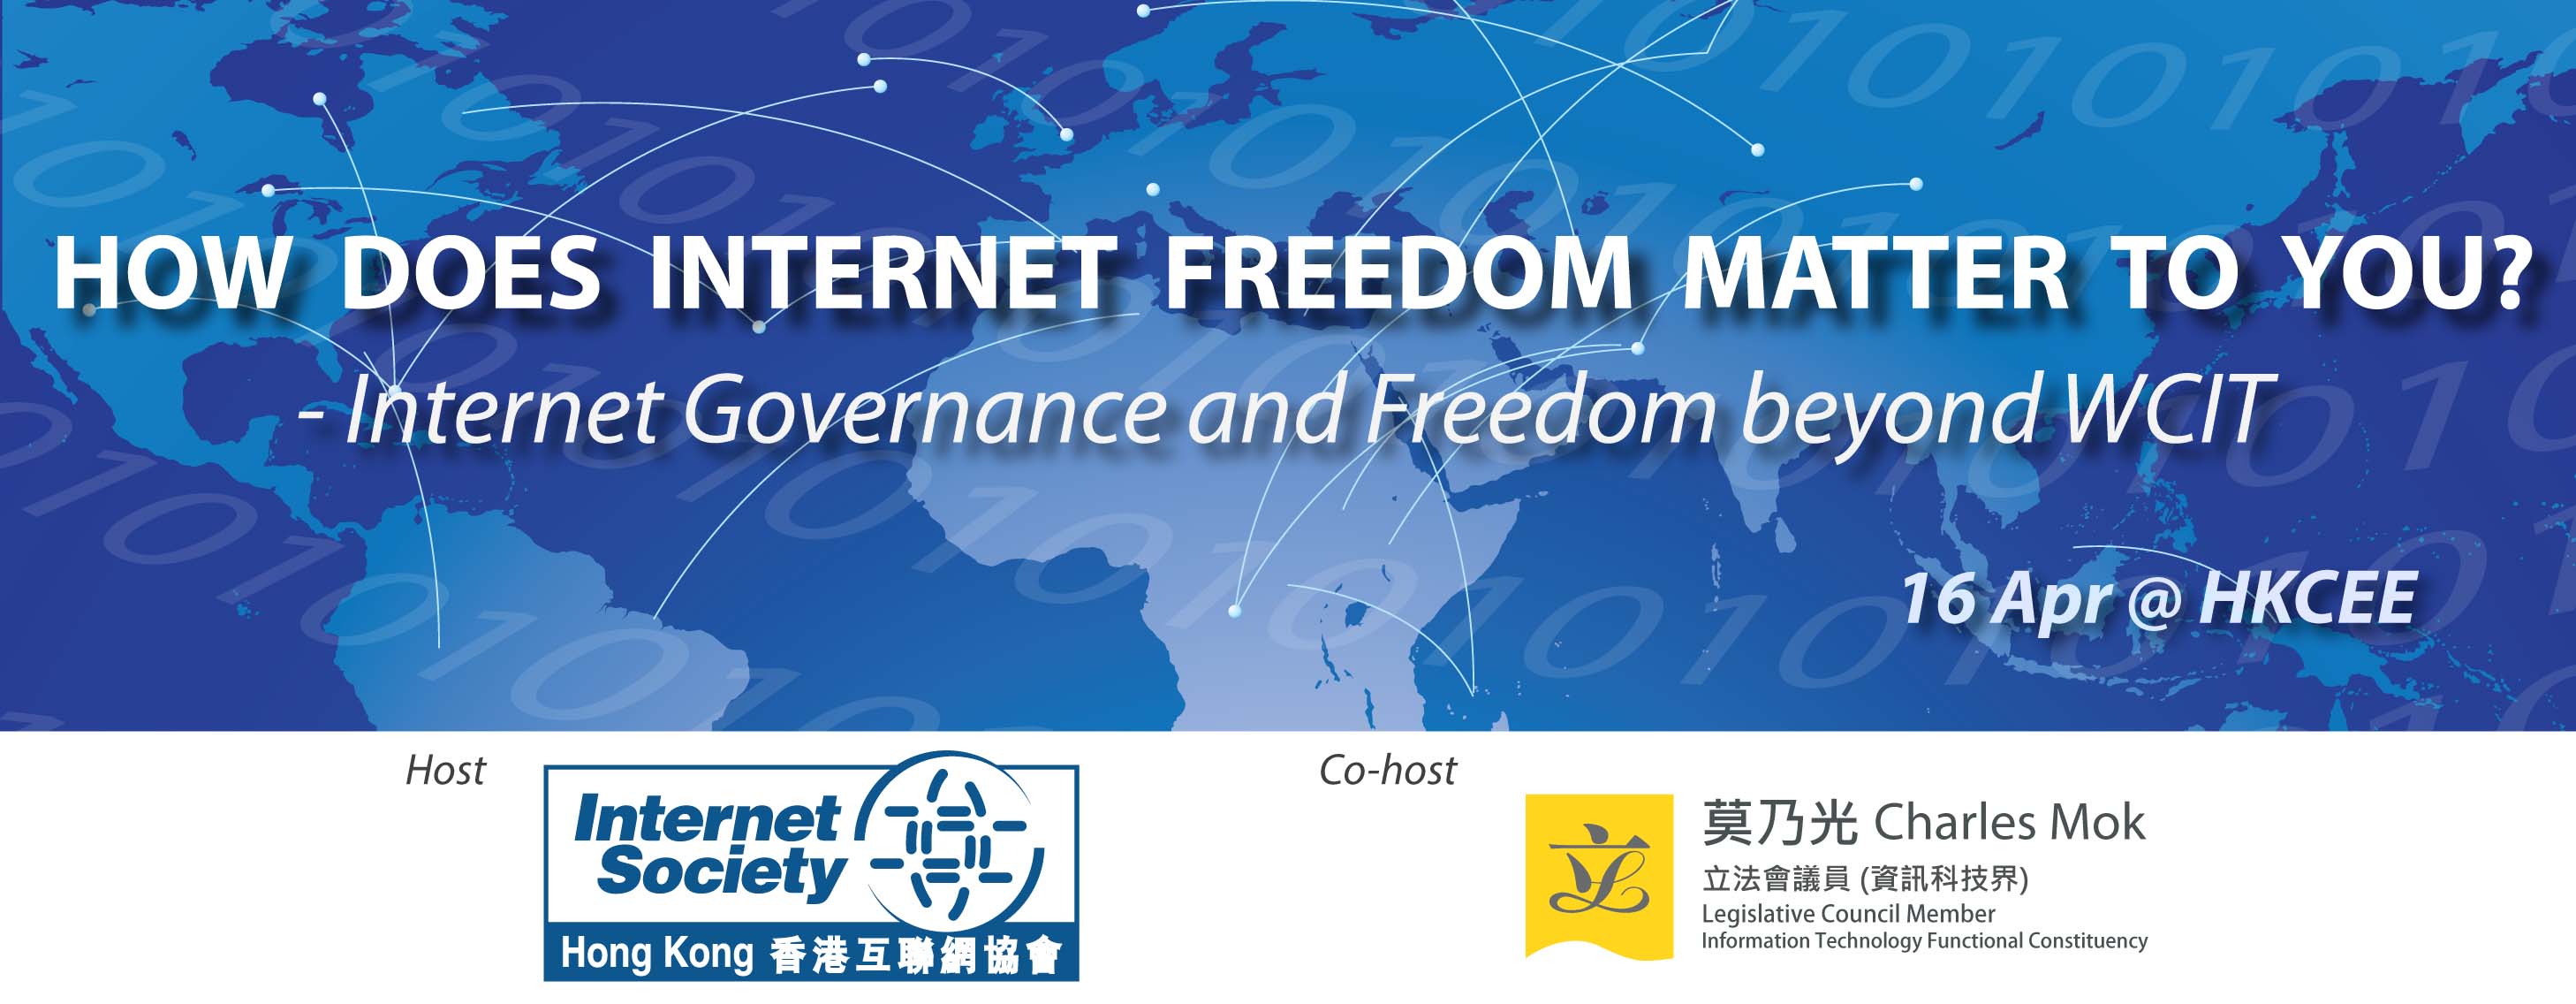 Banner - Internet Freedom